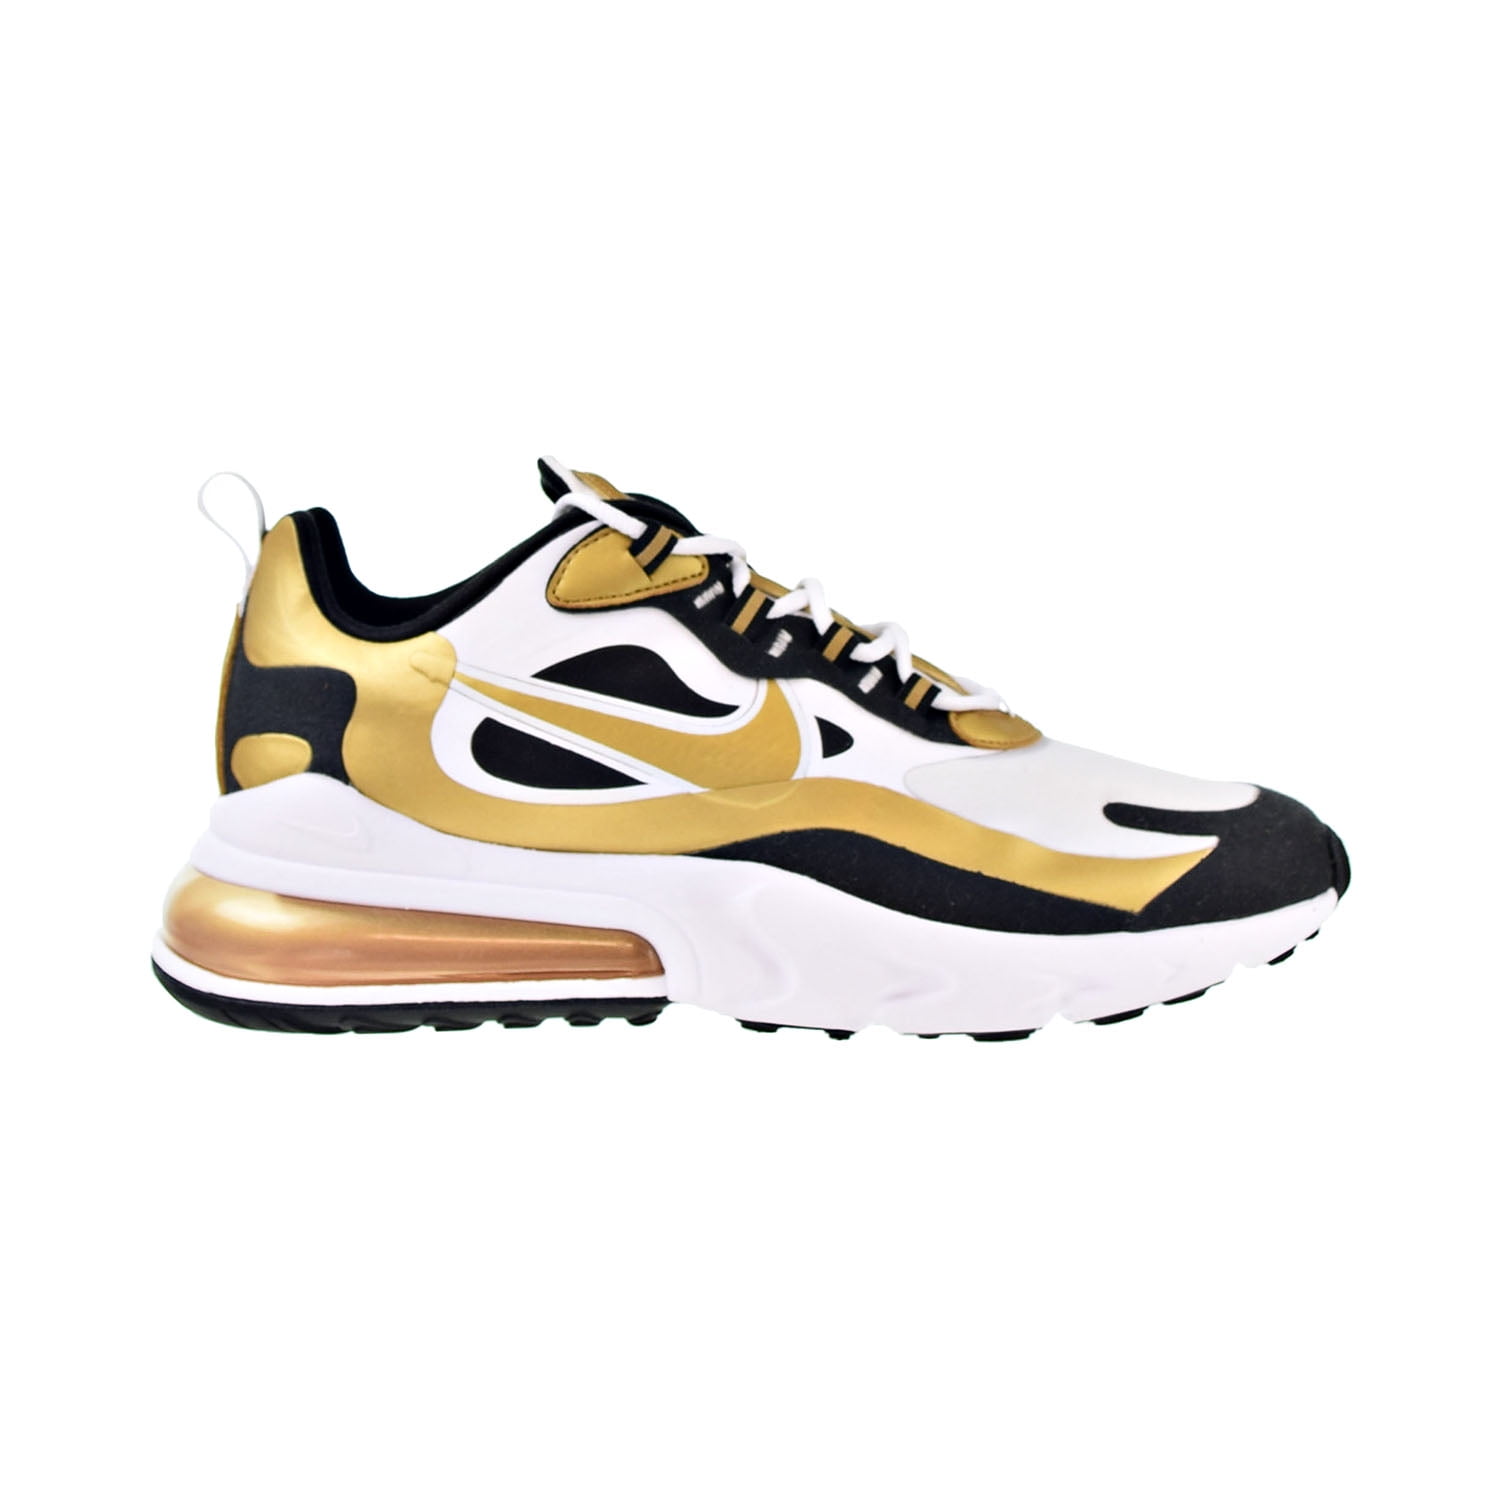 Nike Nike Air Max 270 React Men S Shoes White Metallic Gold Black Cw7298 100 Walmart Com Walmart Com